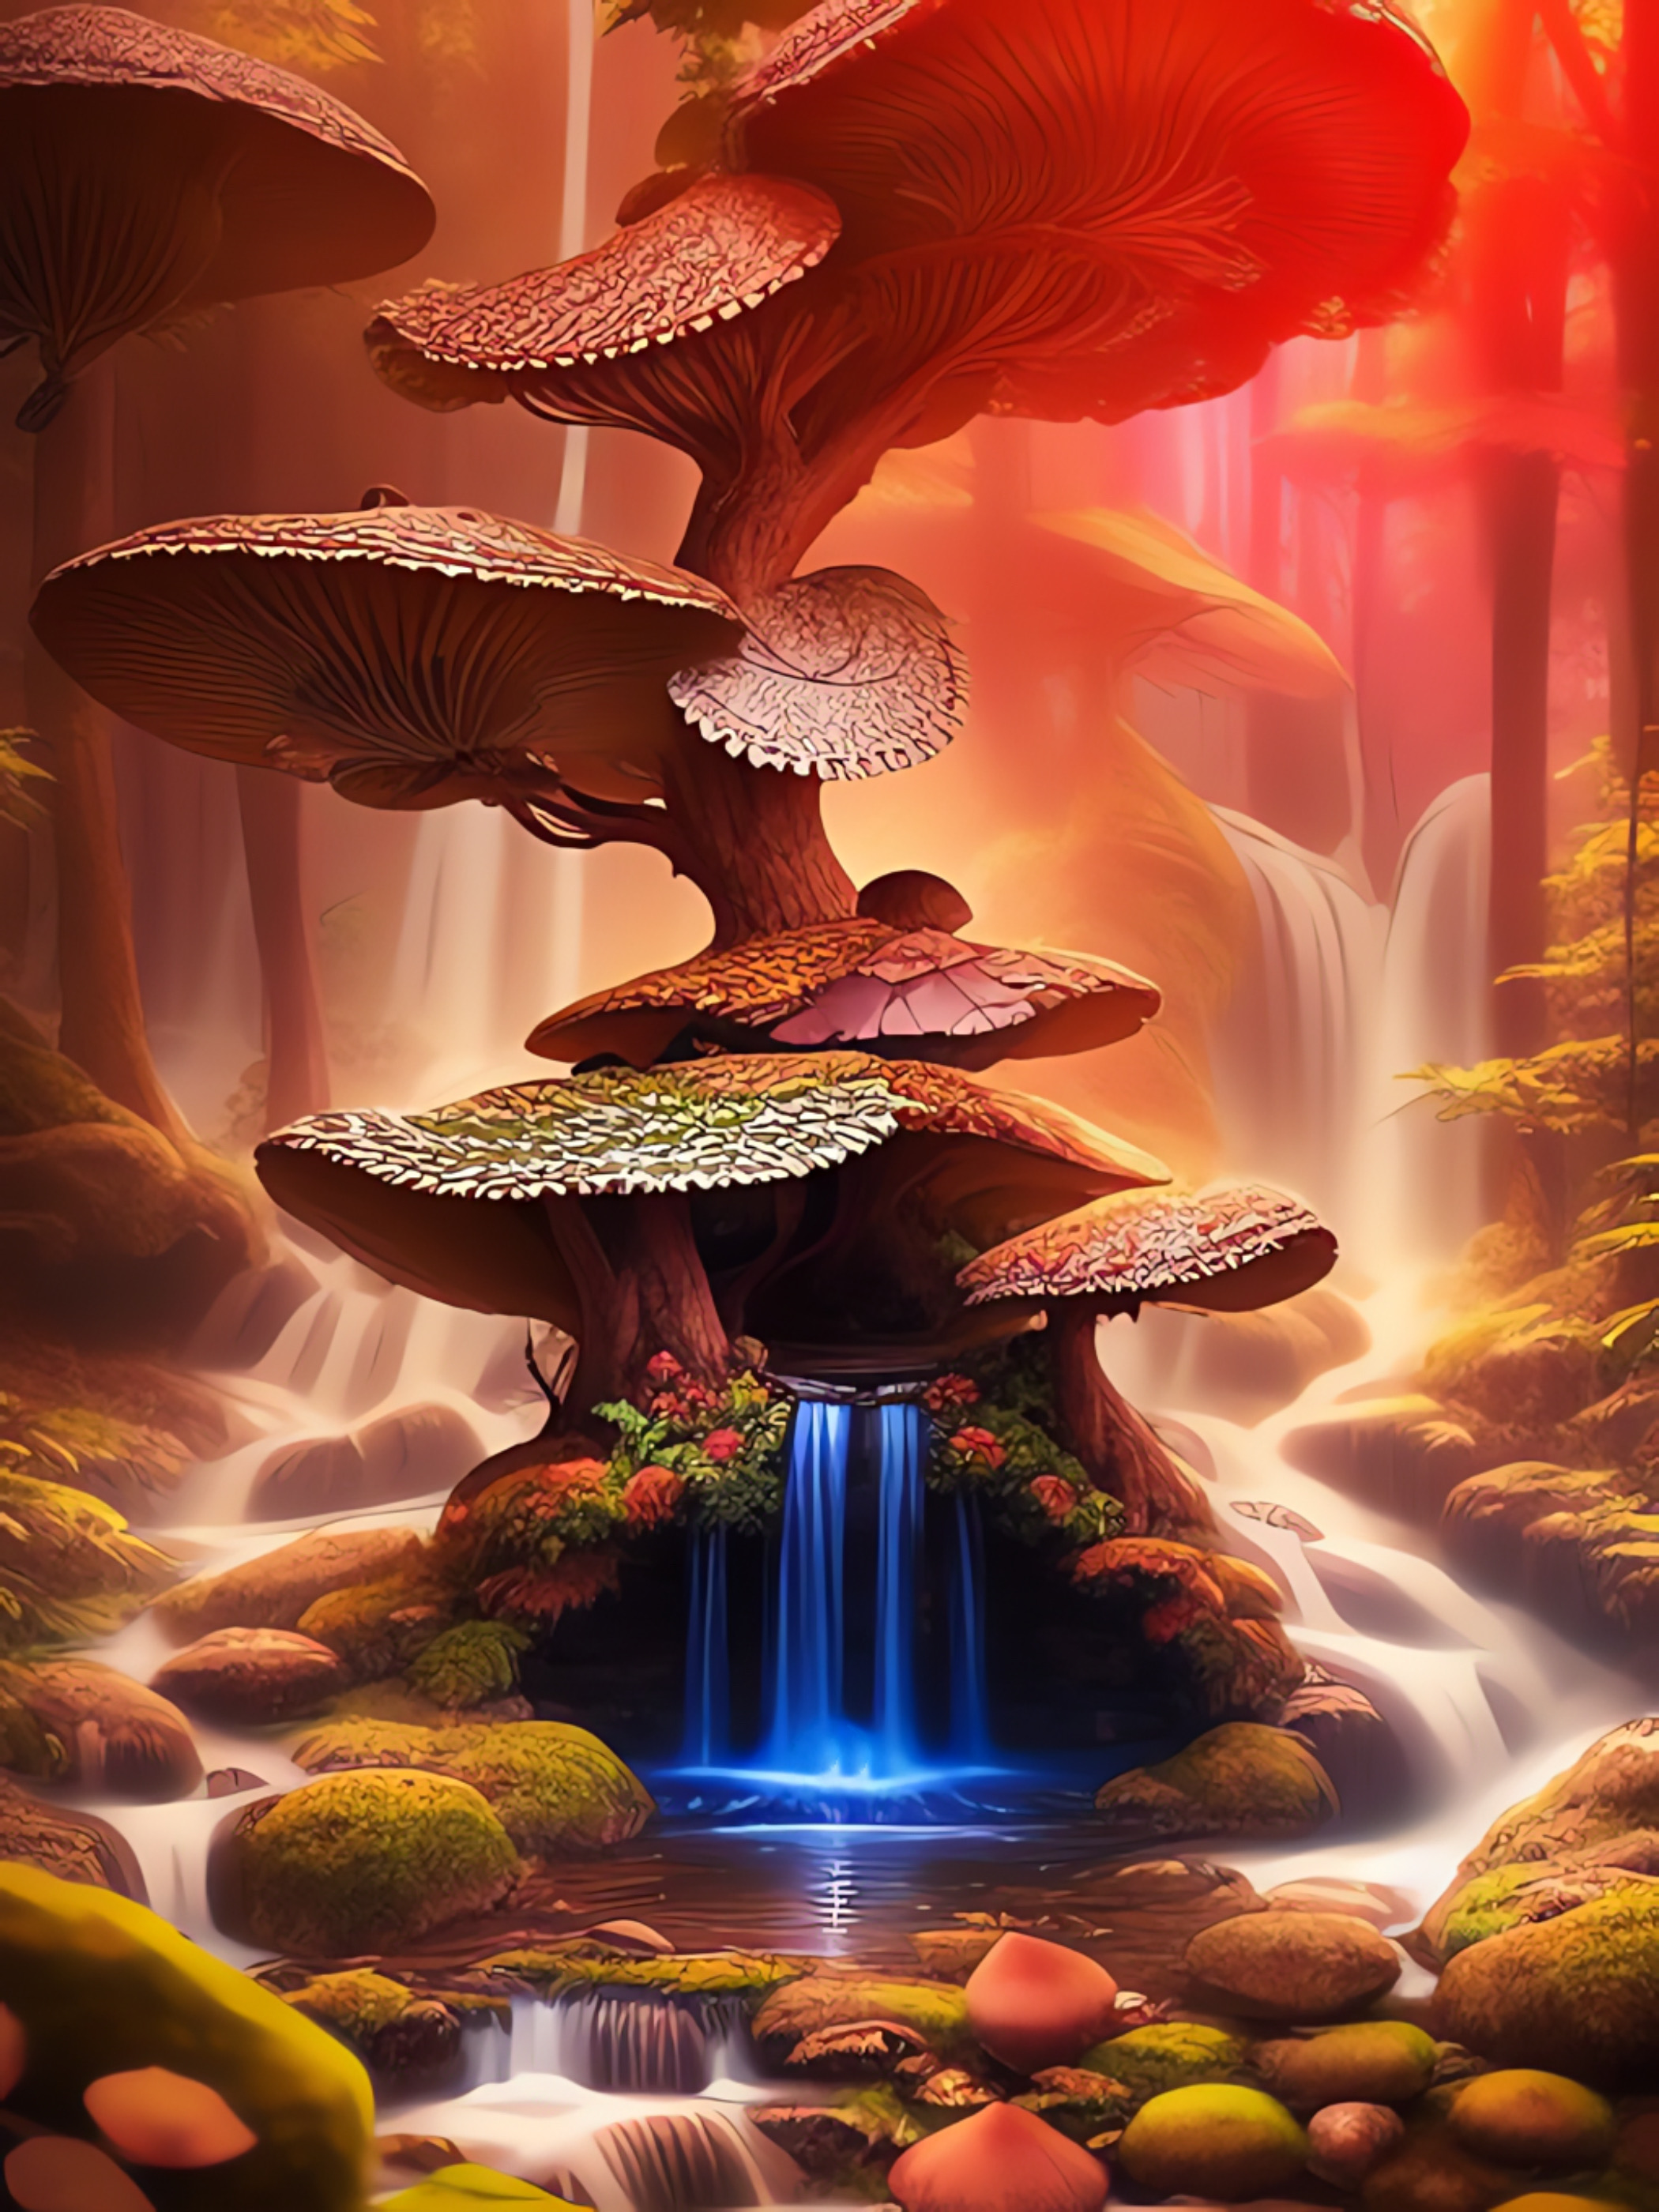 Mandelbrot Mushroom Kingdom: The Way of Water